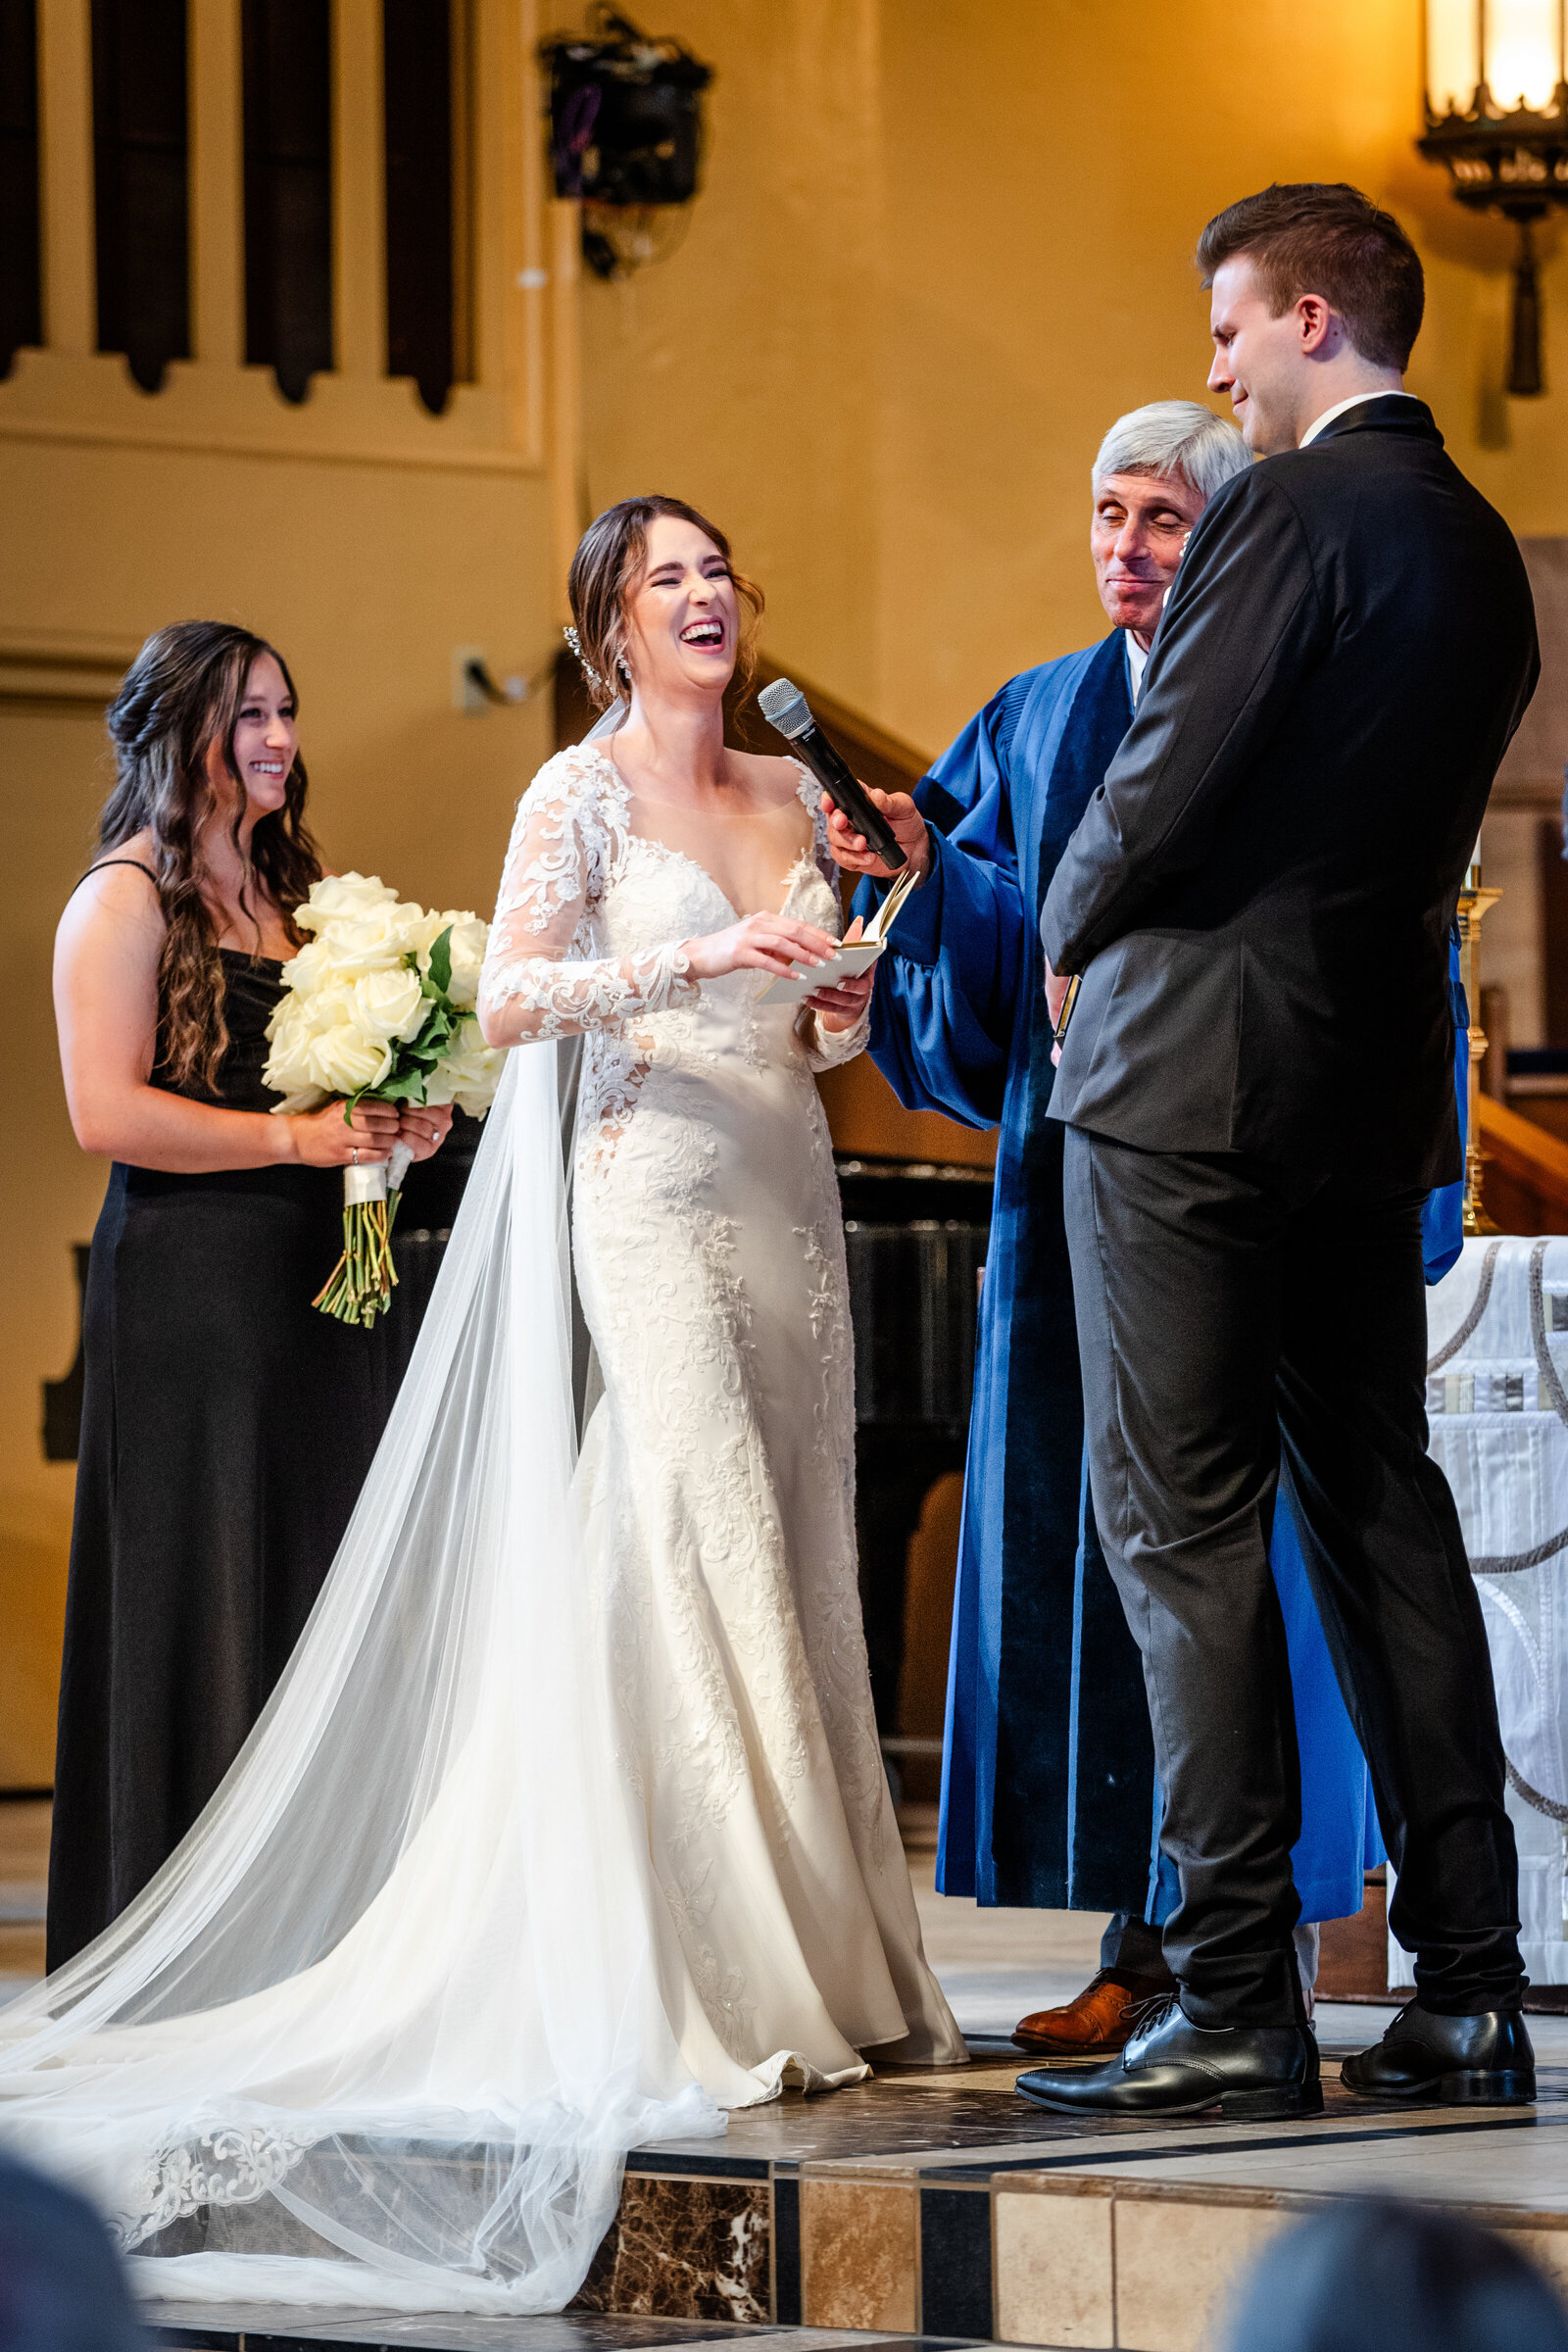 Bride giving vows